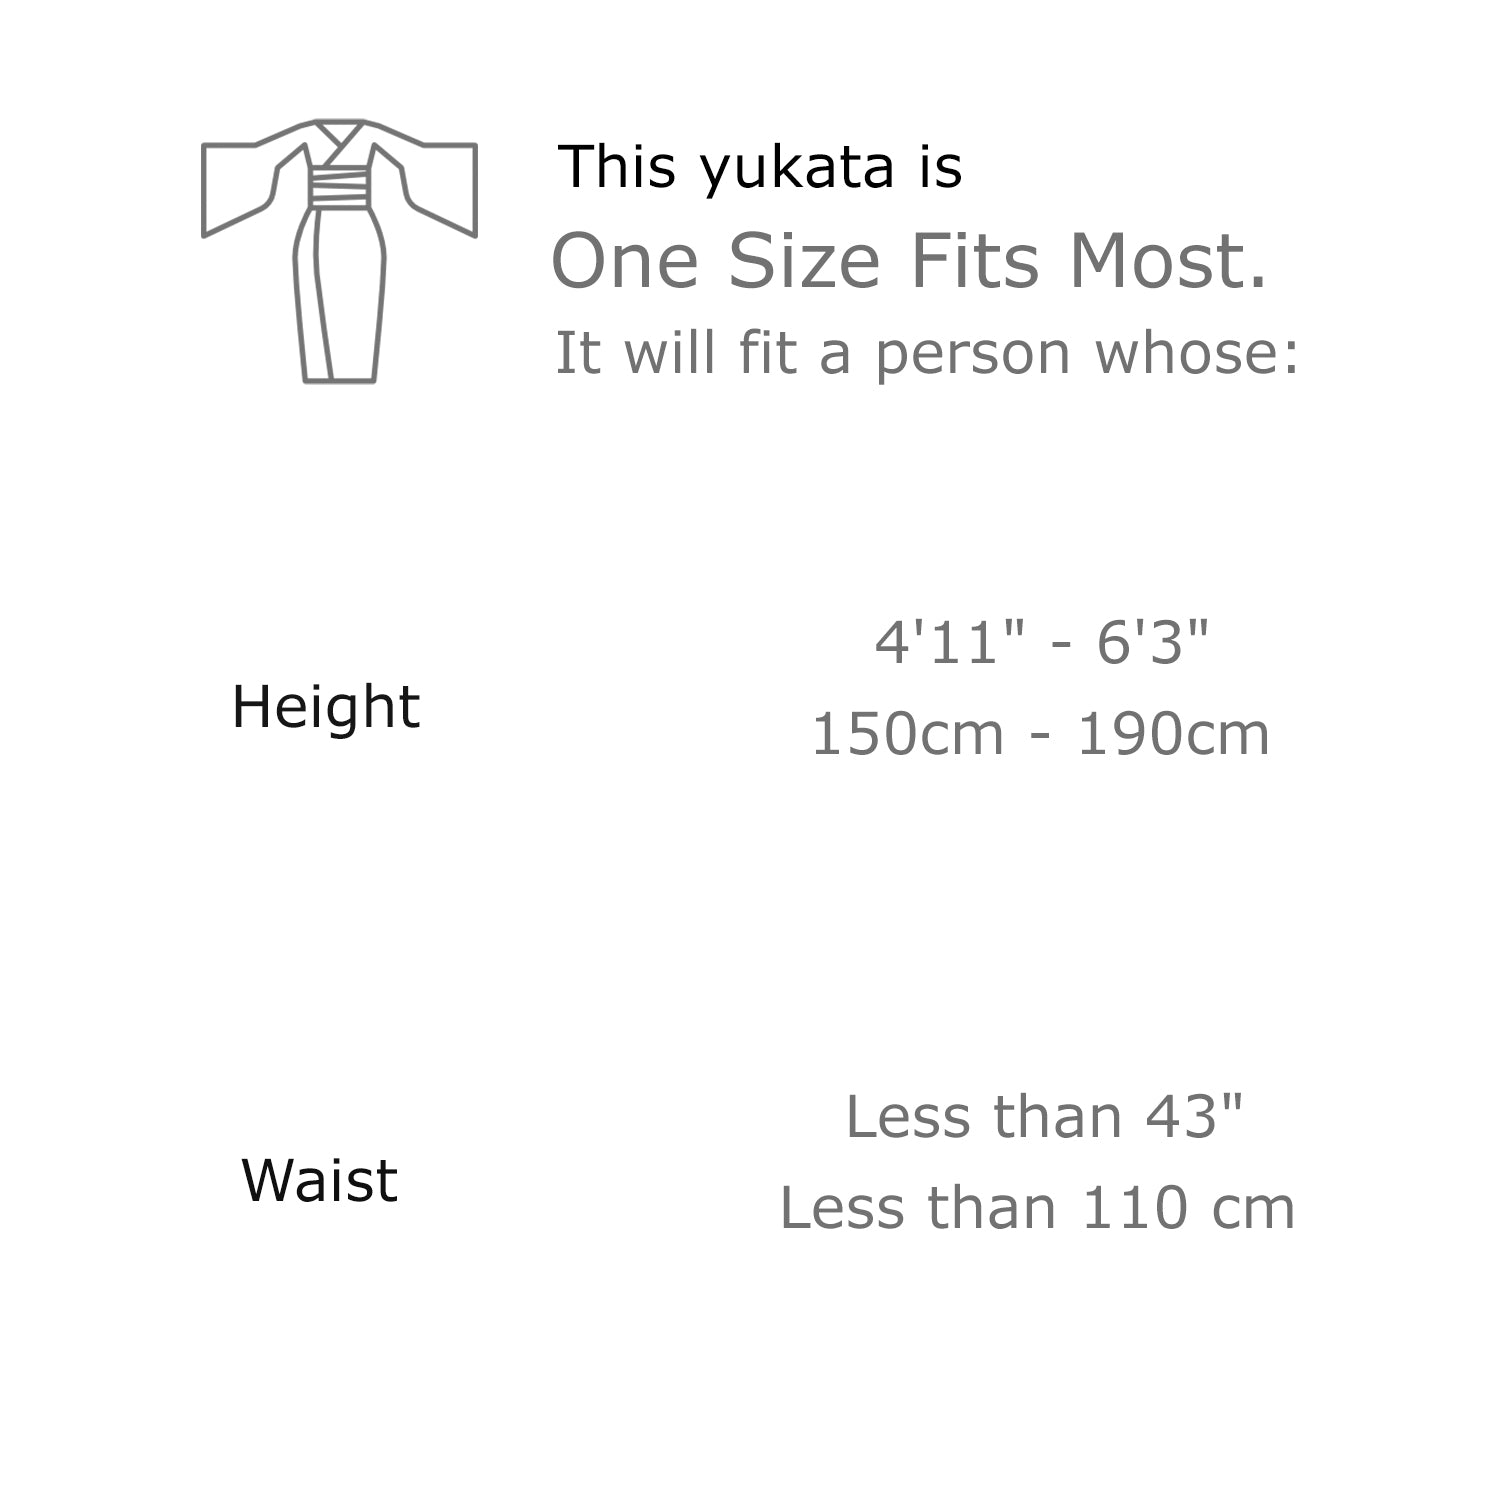 Yukata sizing guide